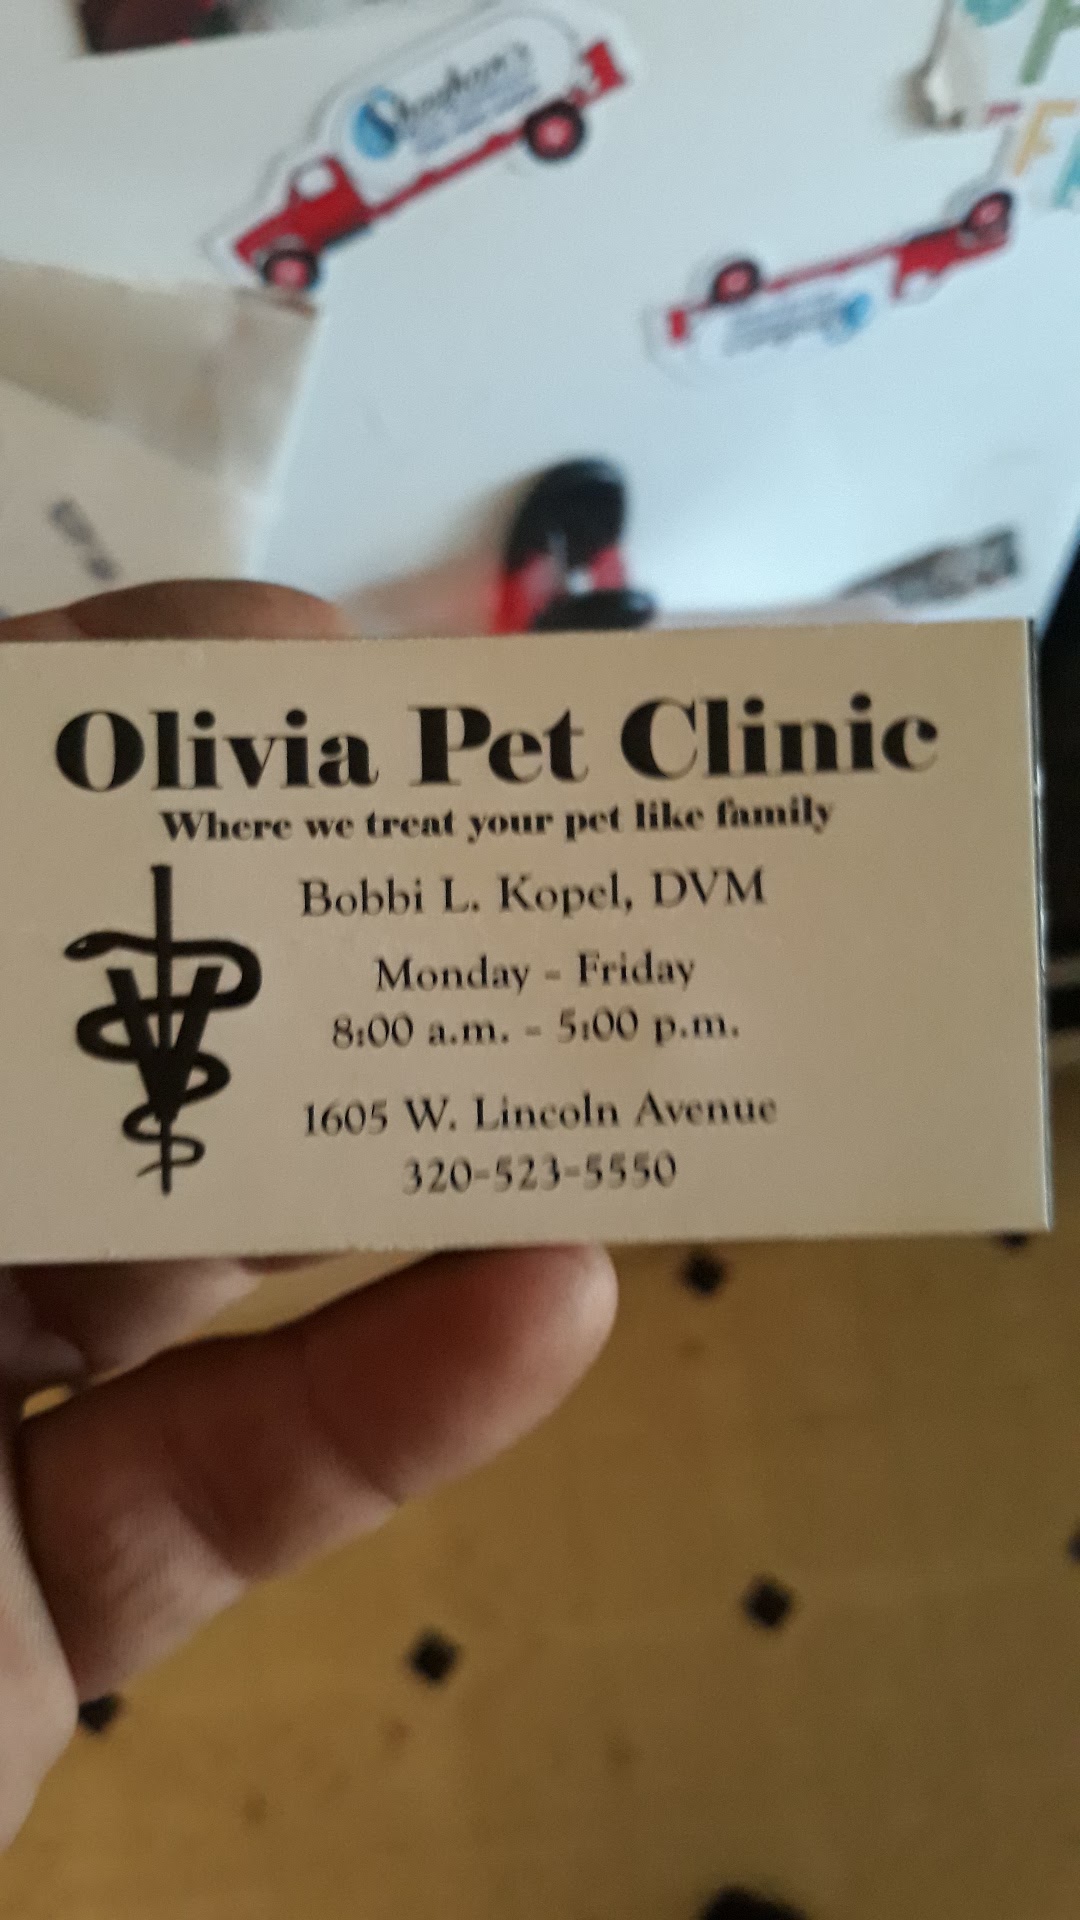 Olivia Pet Clinic 1605 W Lincoln Ave, Olivia Minnesota 56277